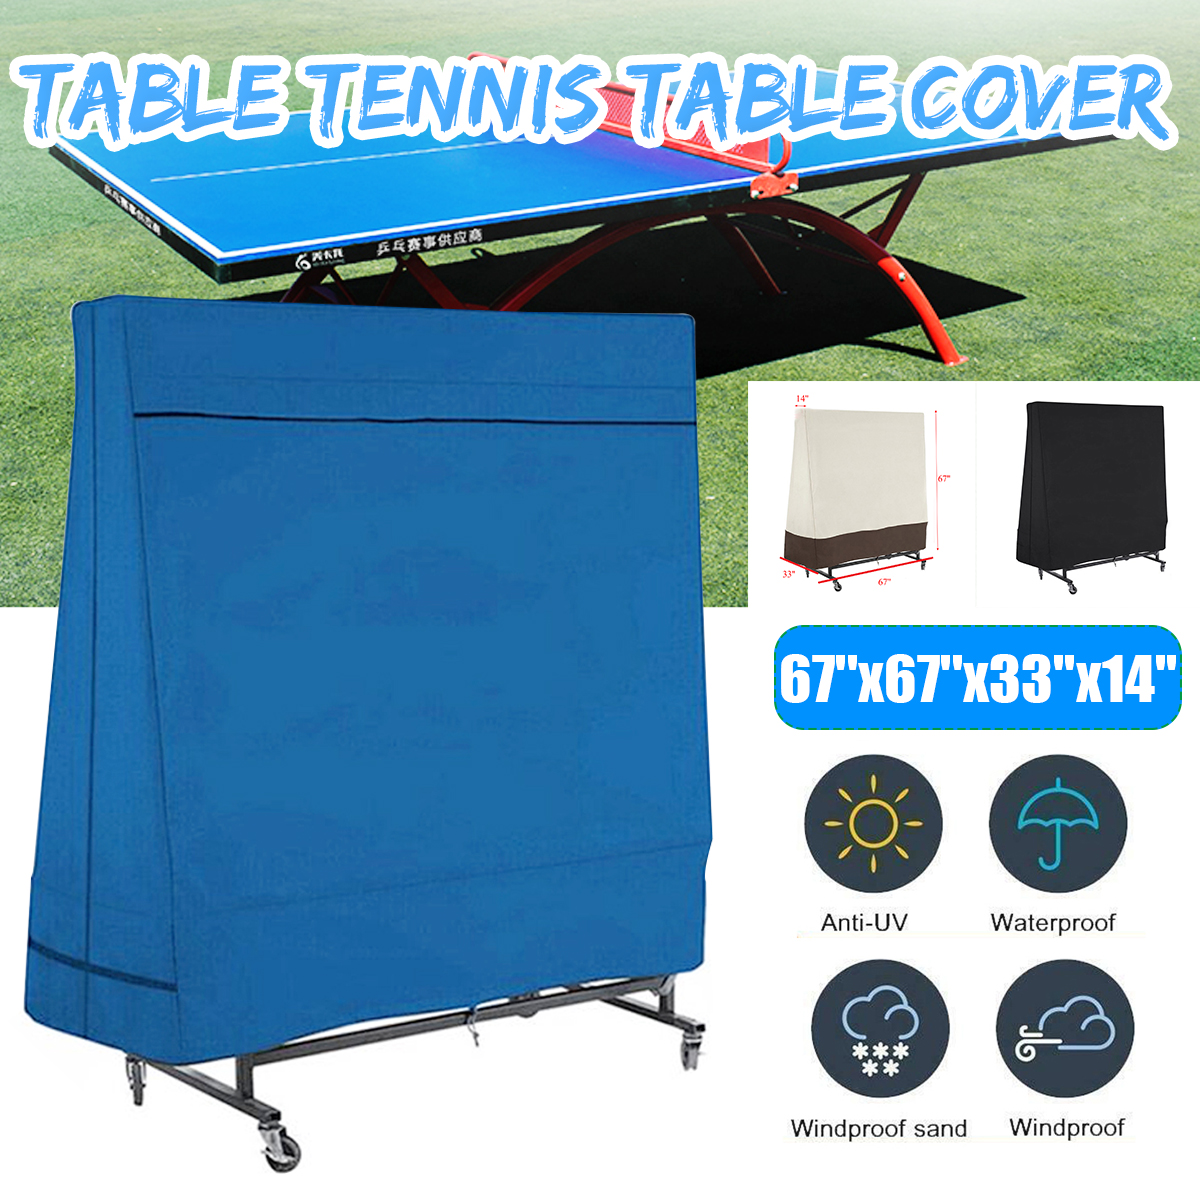 67x67x33x14-Waterproof-Dustproof-Table-Tennis-Table-Cover-1734954-2